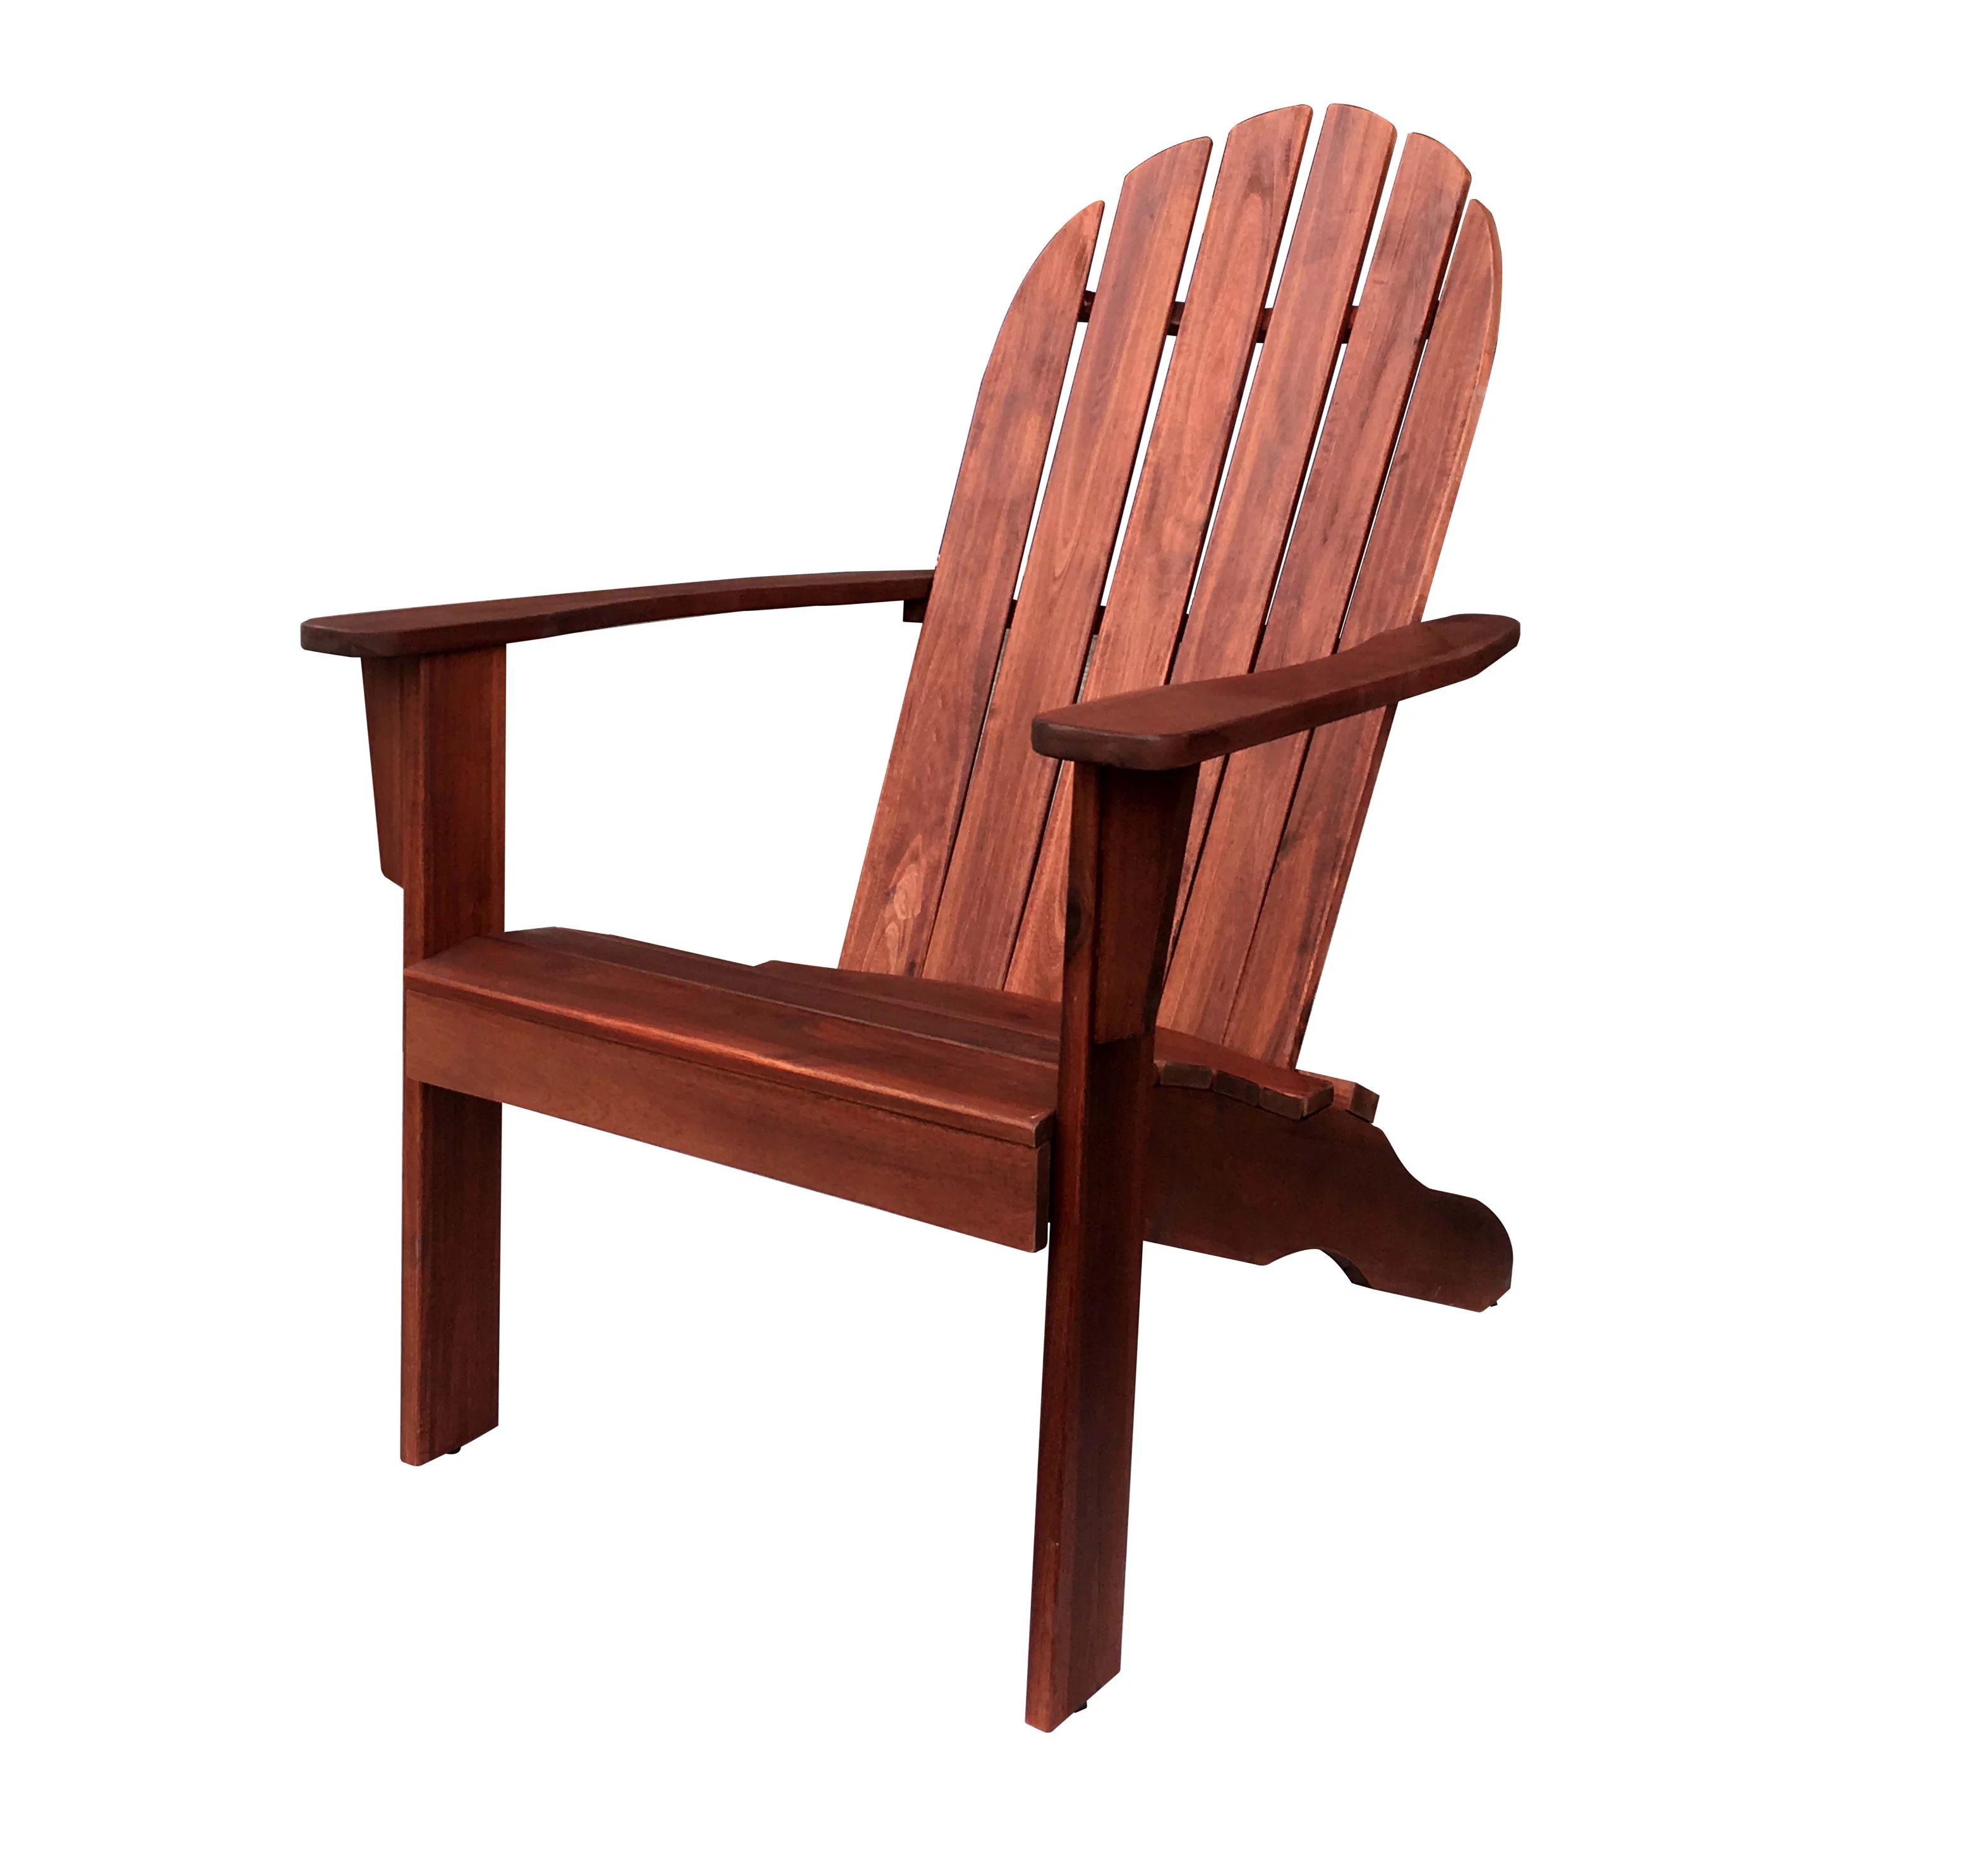 Mainstays Wood Outdoor Adirondack Chair, Dark Brown Color | Walmart (US)